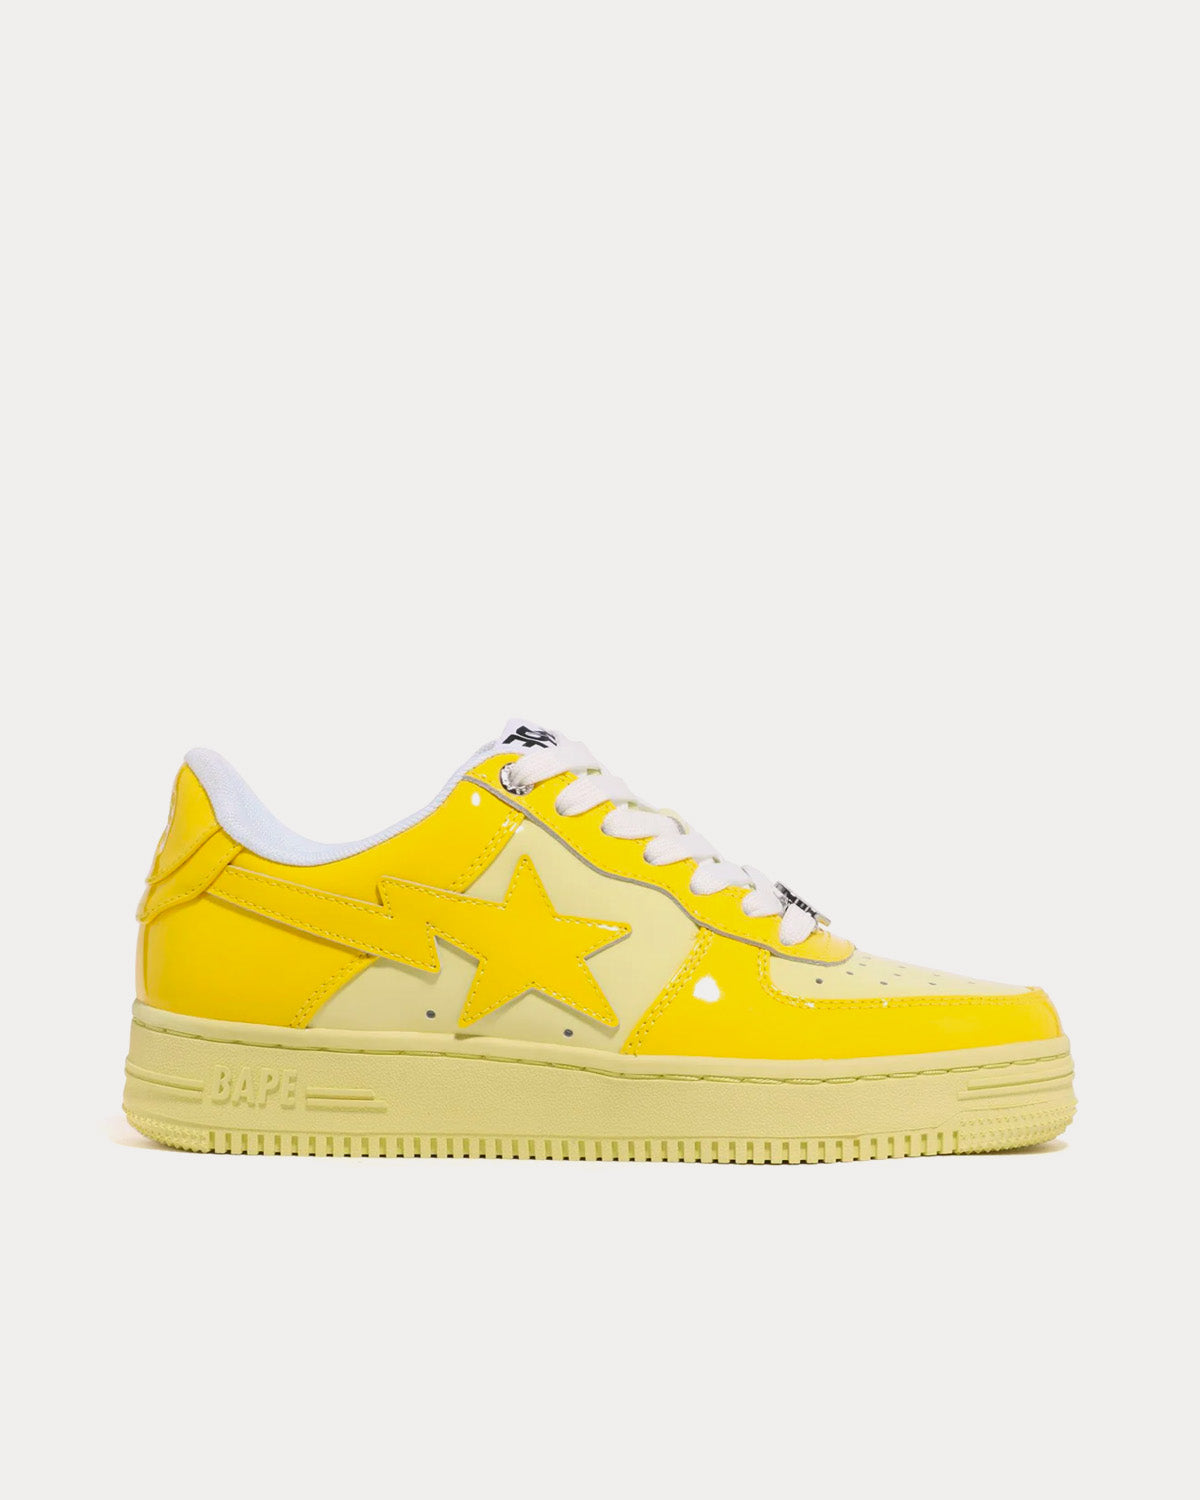 Bape Sta Colors Light Yellow Low Top Sneakers